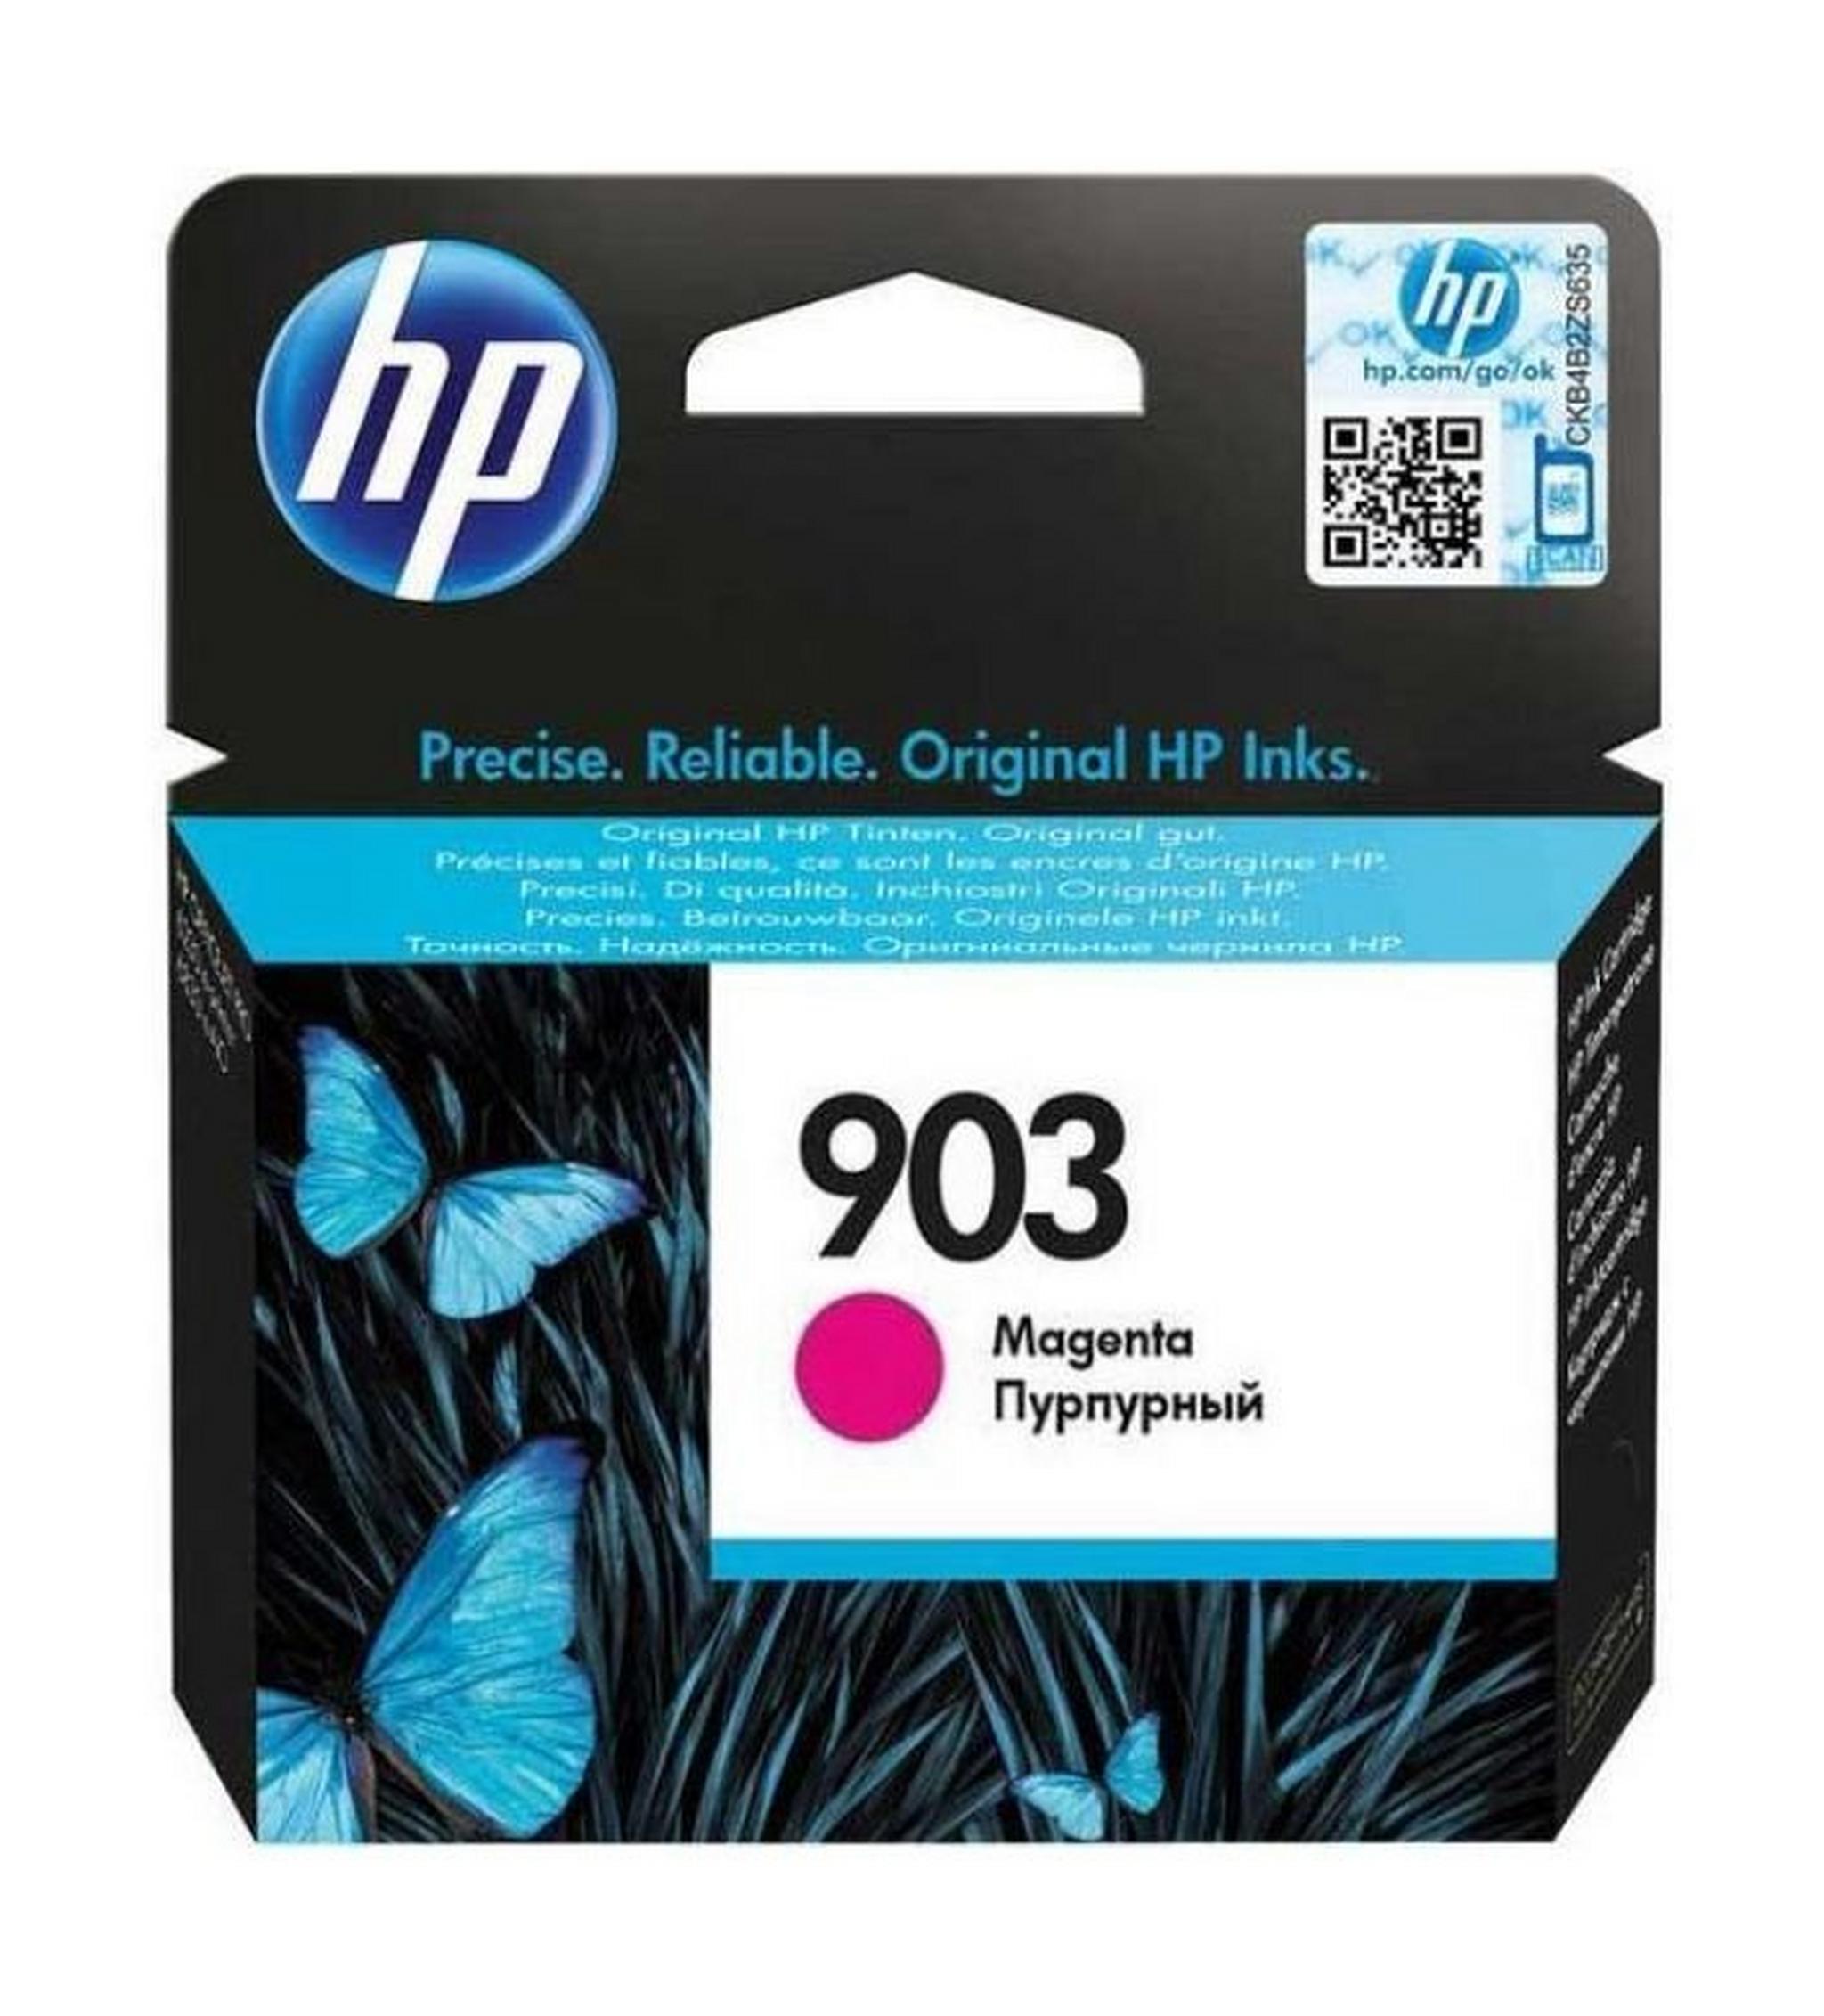 HP Ink 903 Magenta Ink